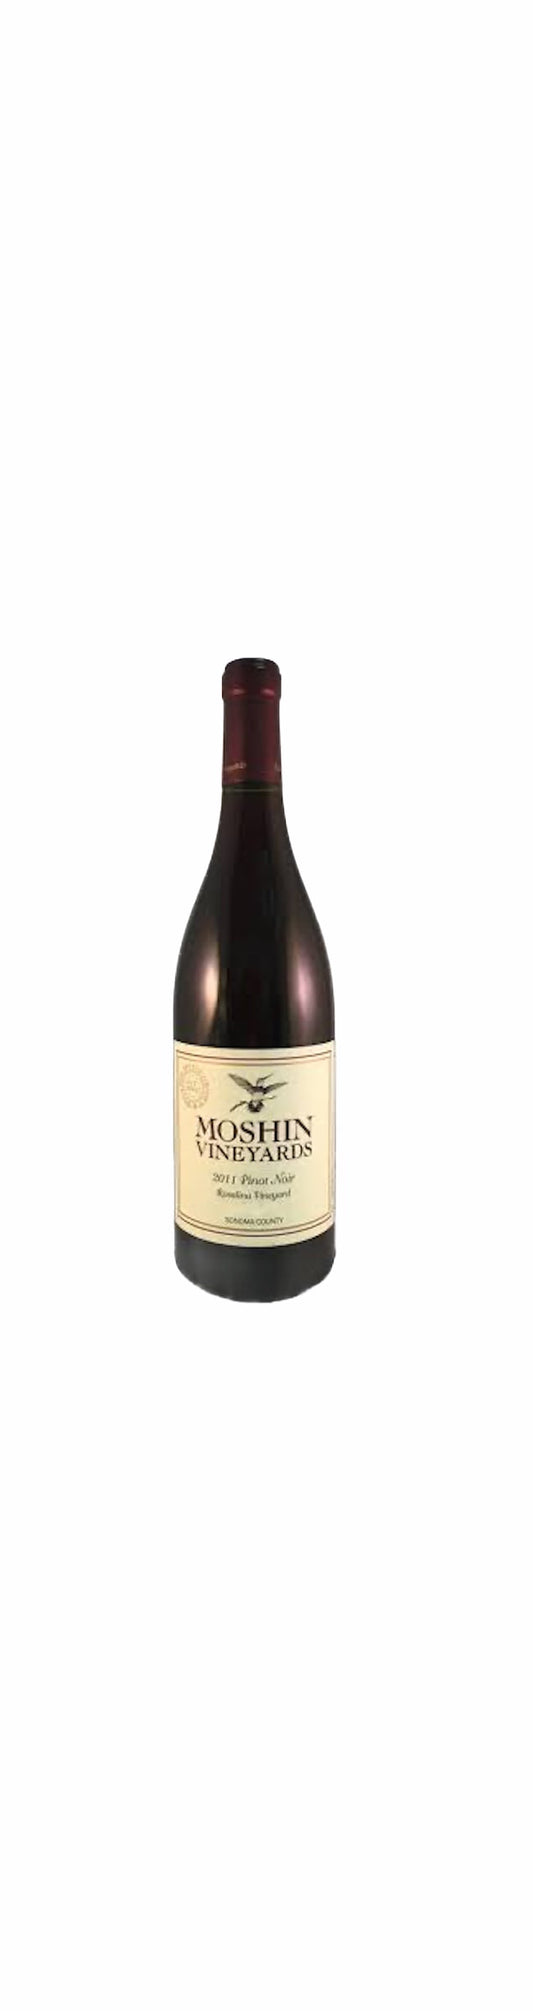 Moshin Vineyards Chardonnay